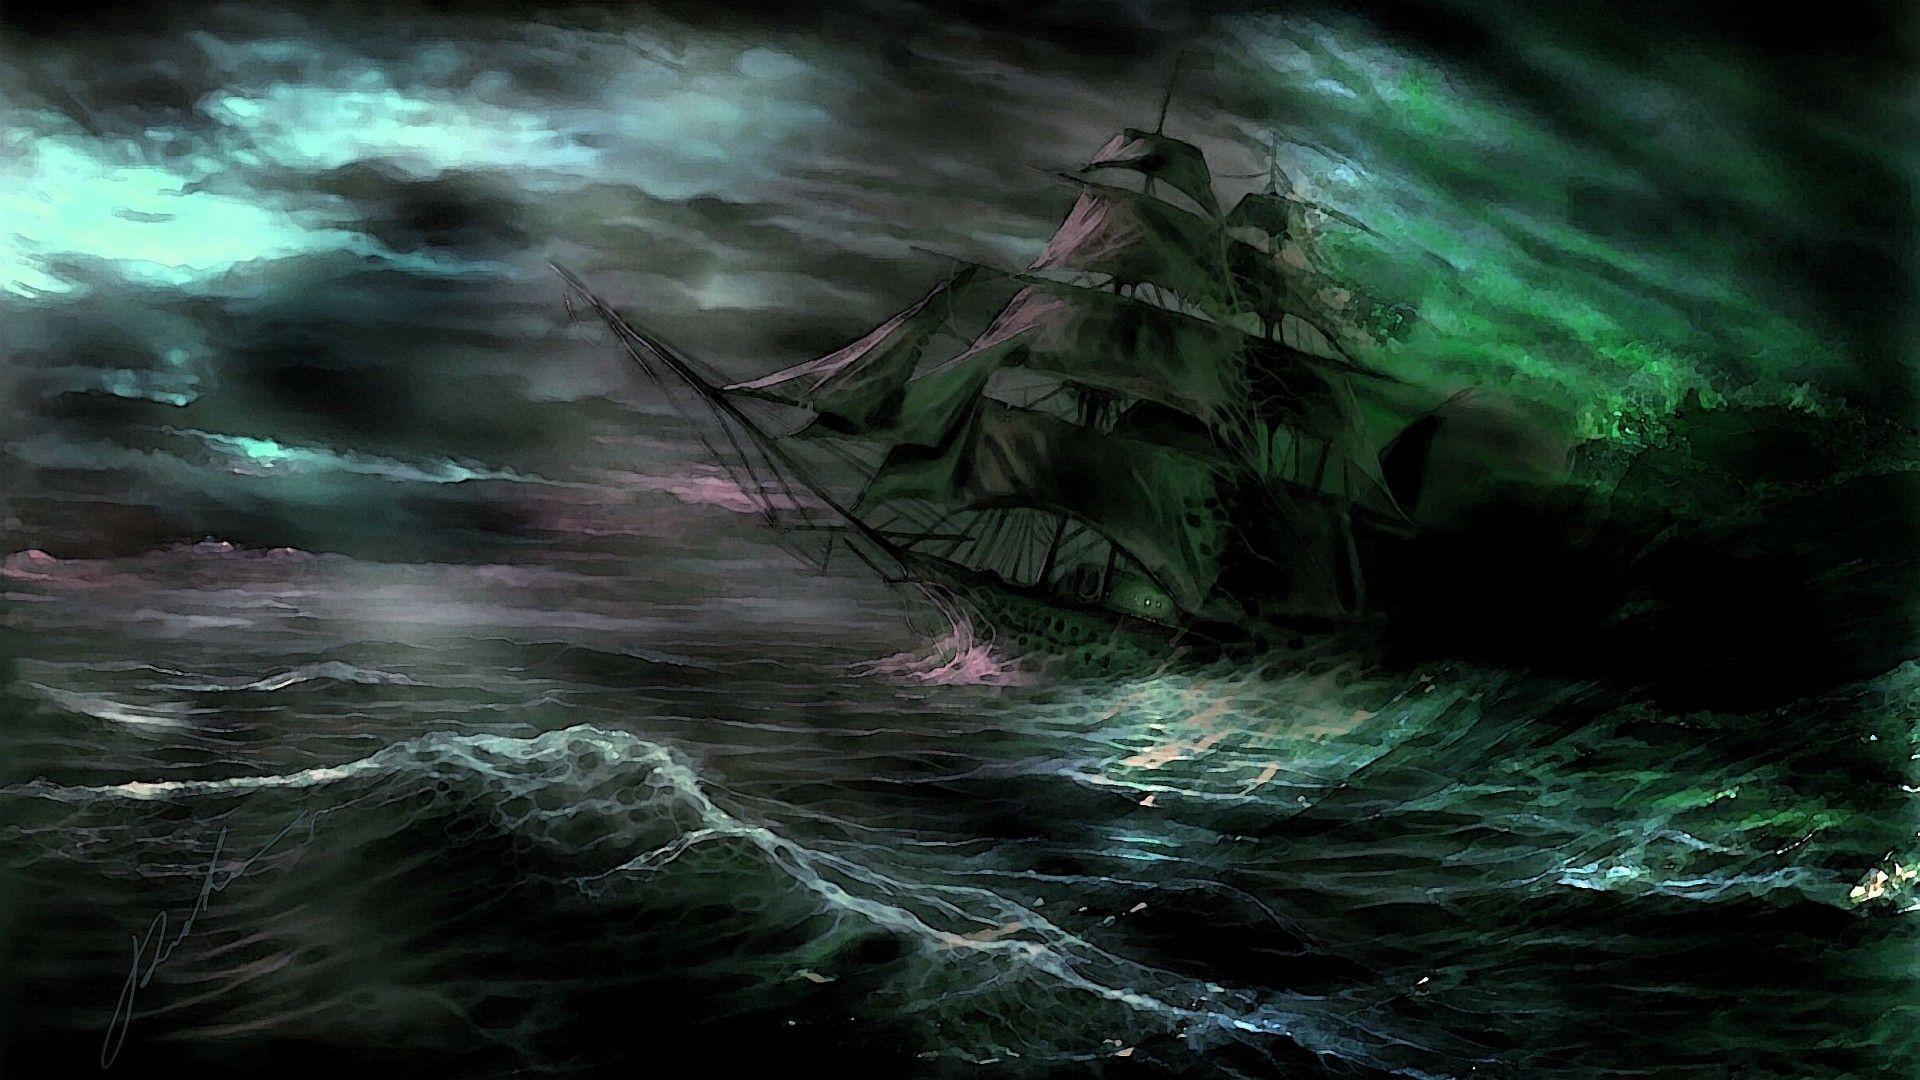 Fantasy Dark Sea Wallpaper. Free Download GameFree Download Game